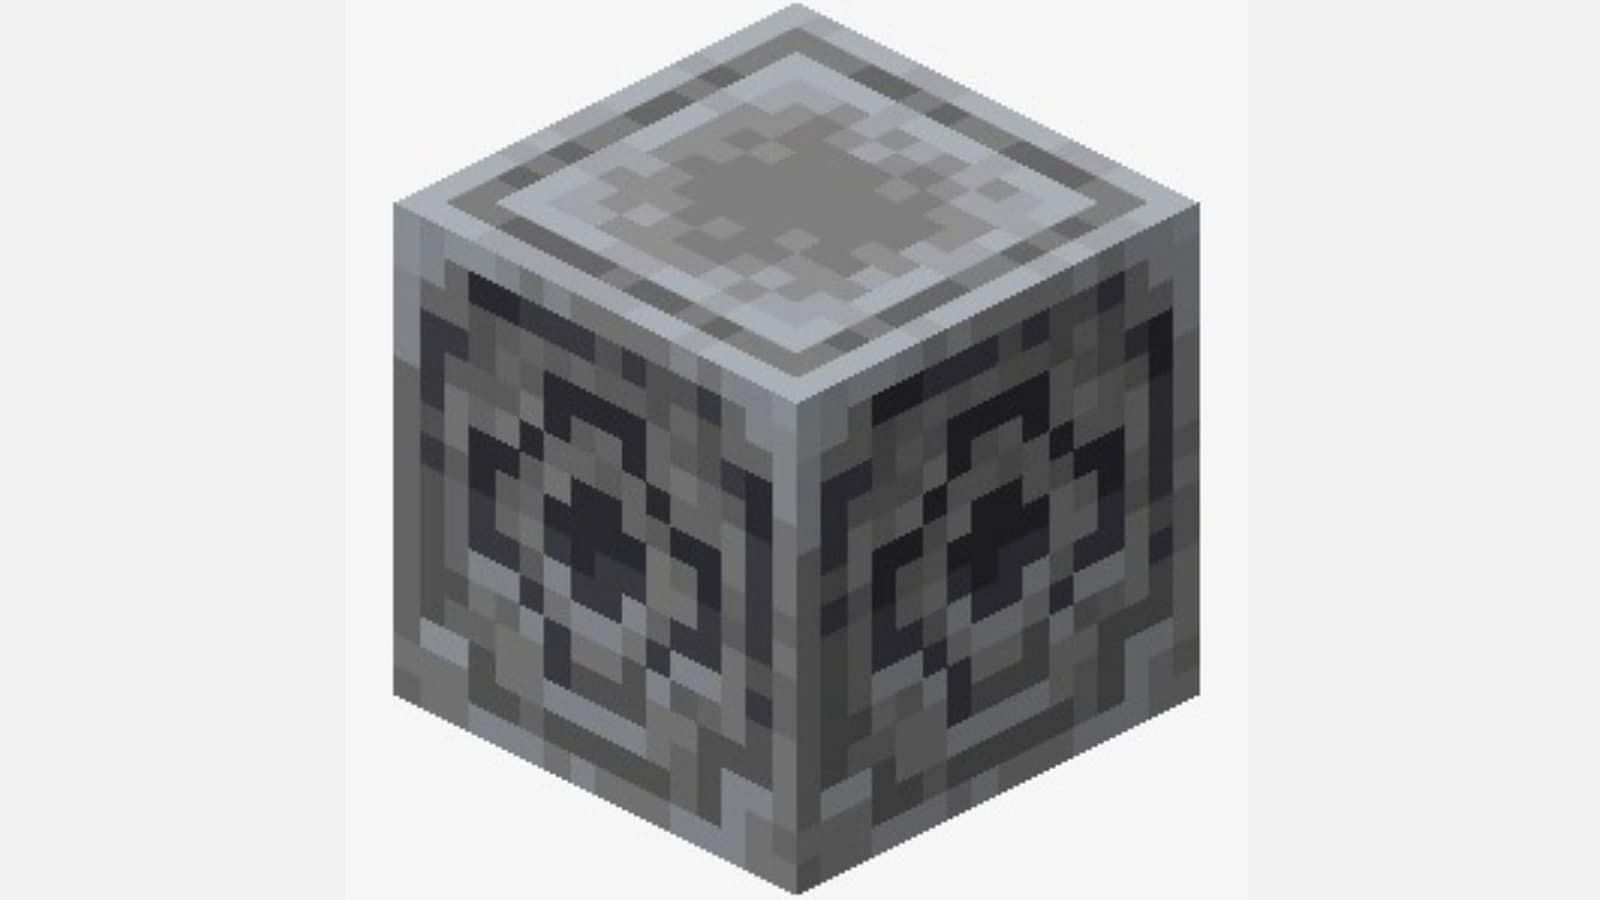 A Lodestone block in Minecraft (Image via Minecraft)